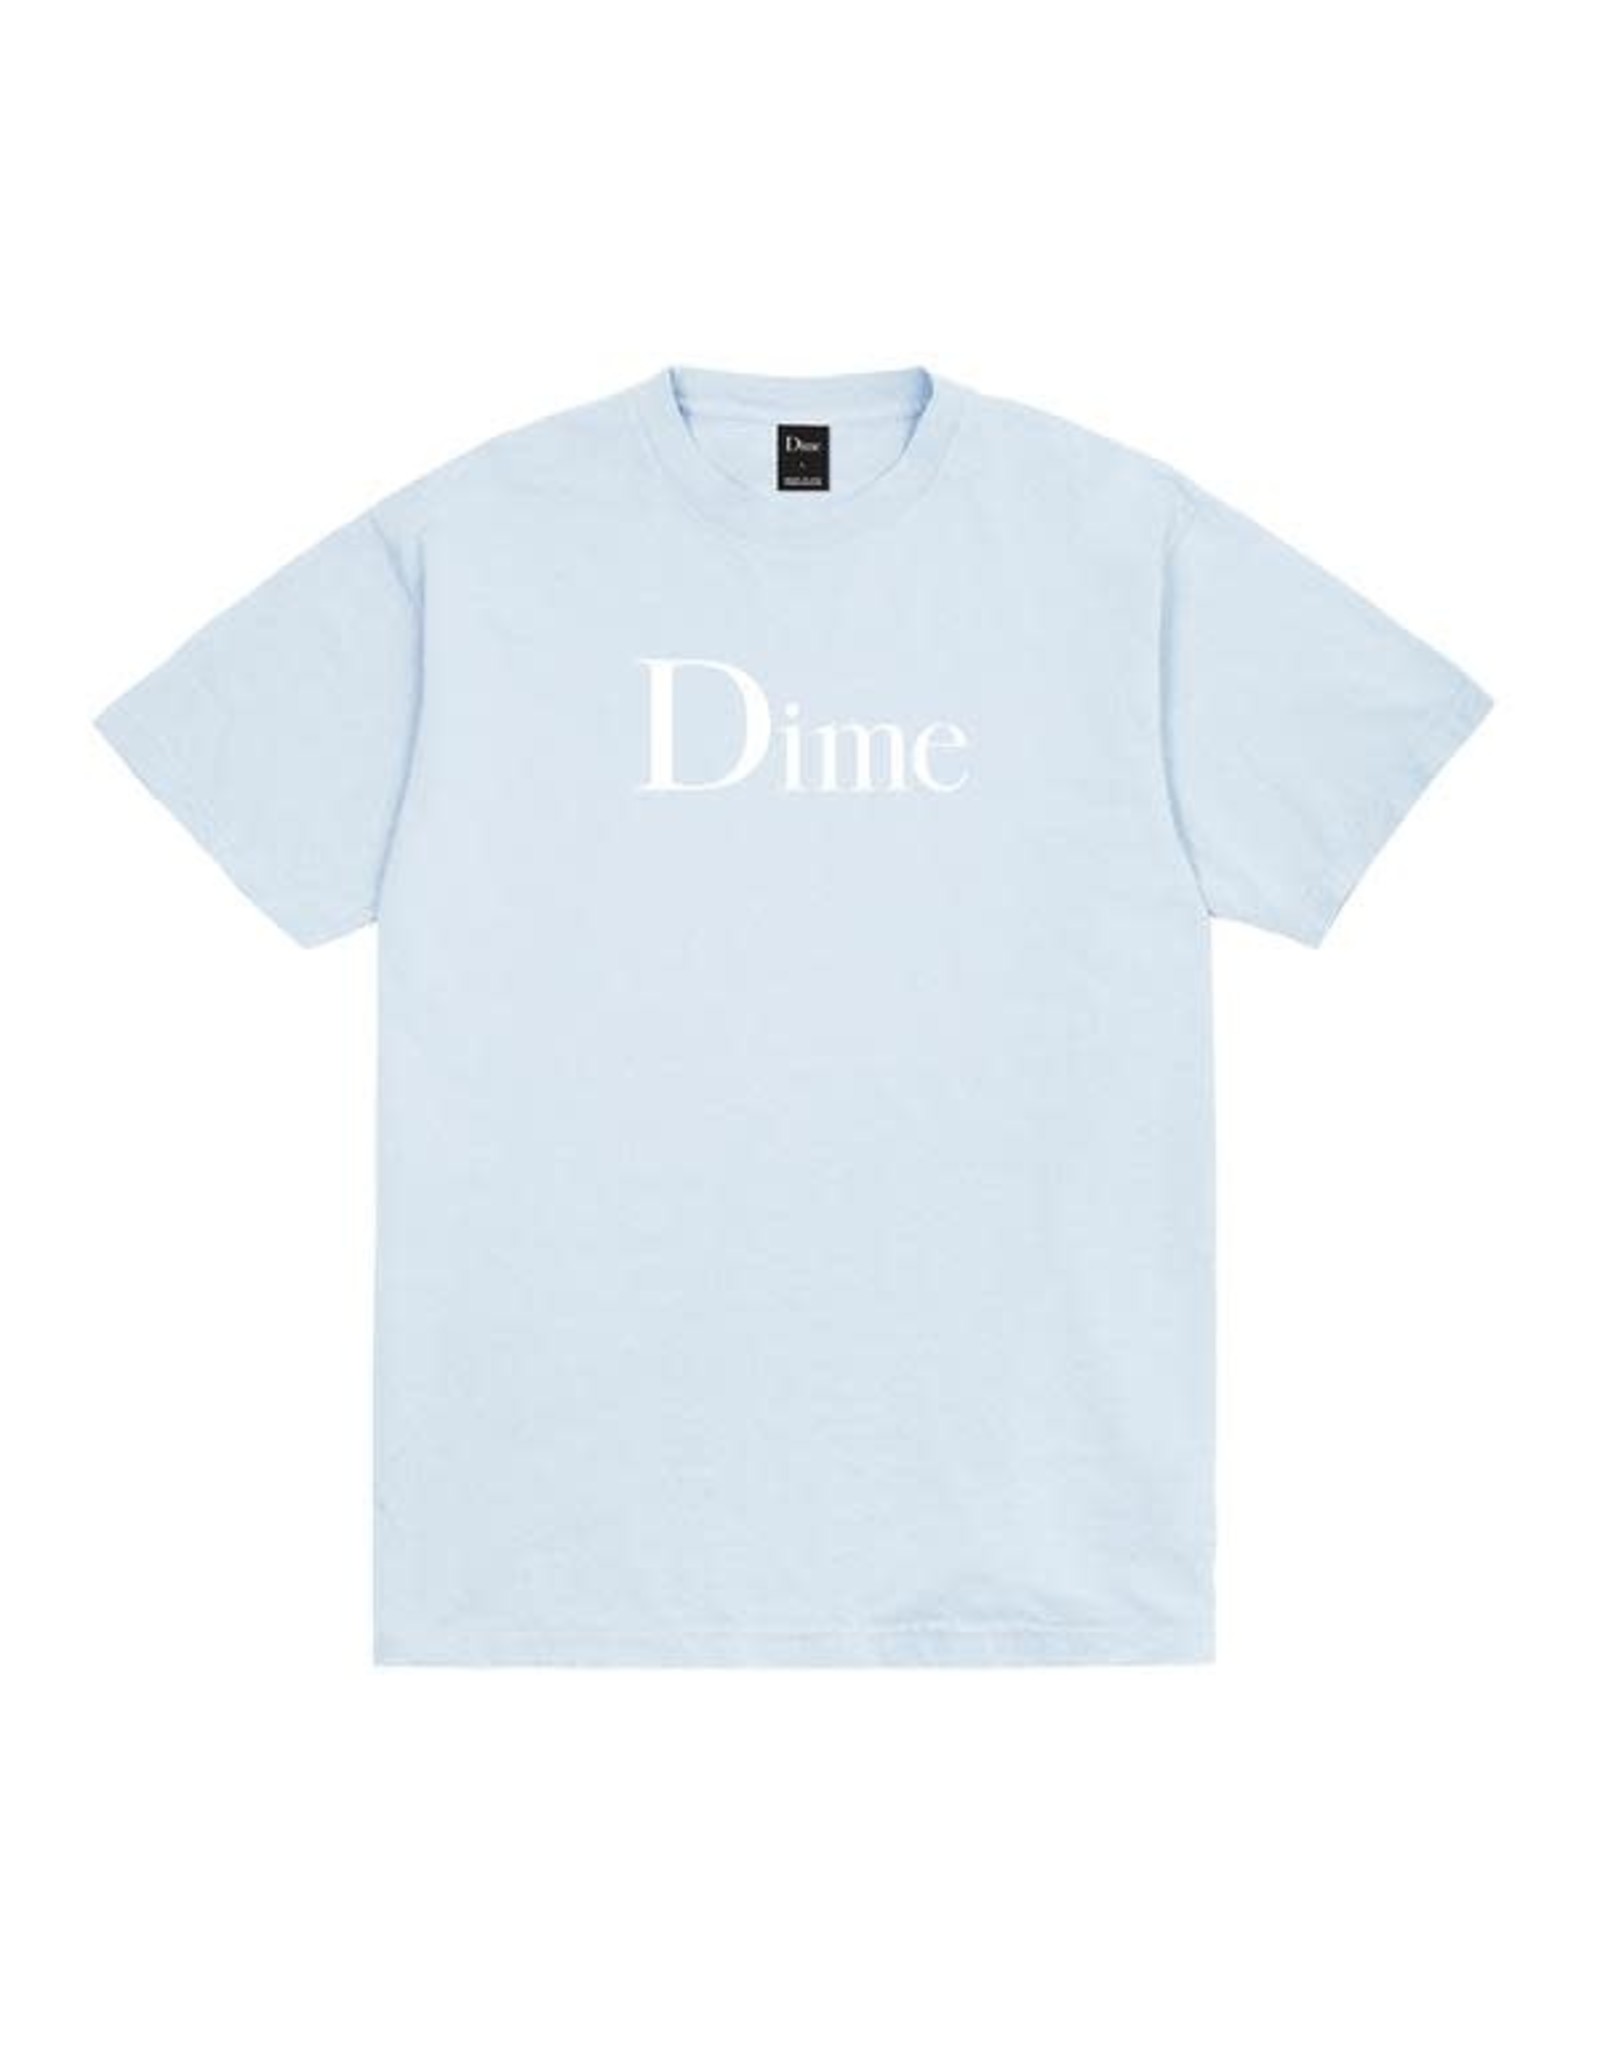 DIME Dime classic logo t-shirt